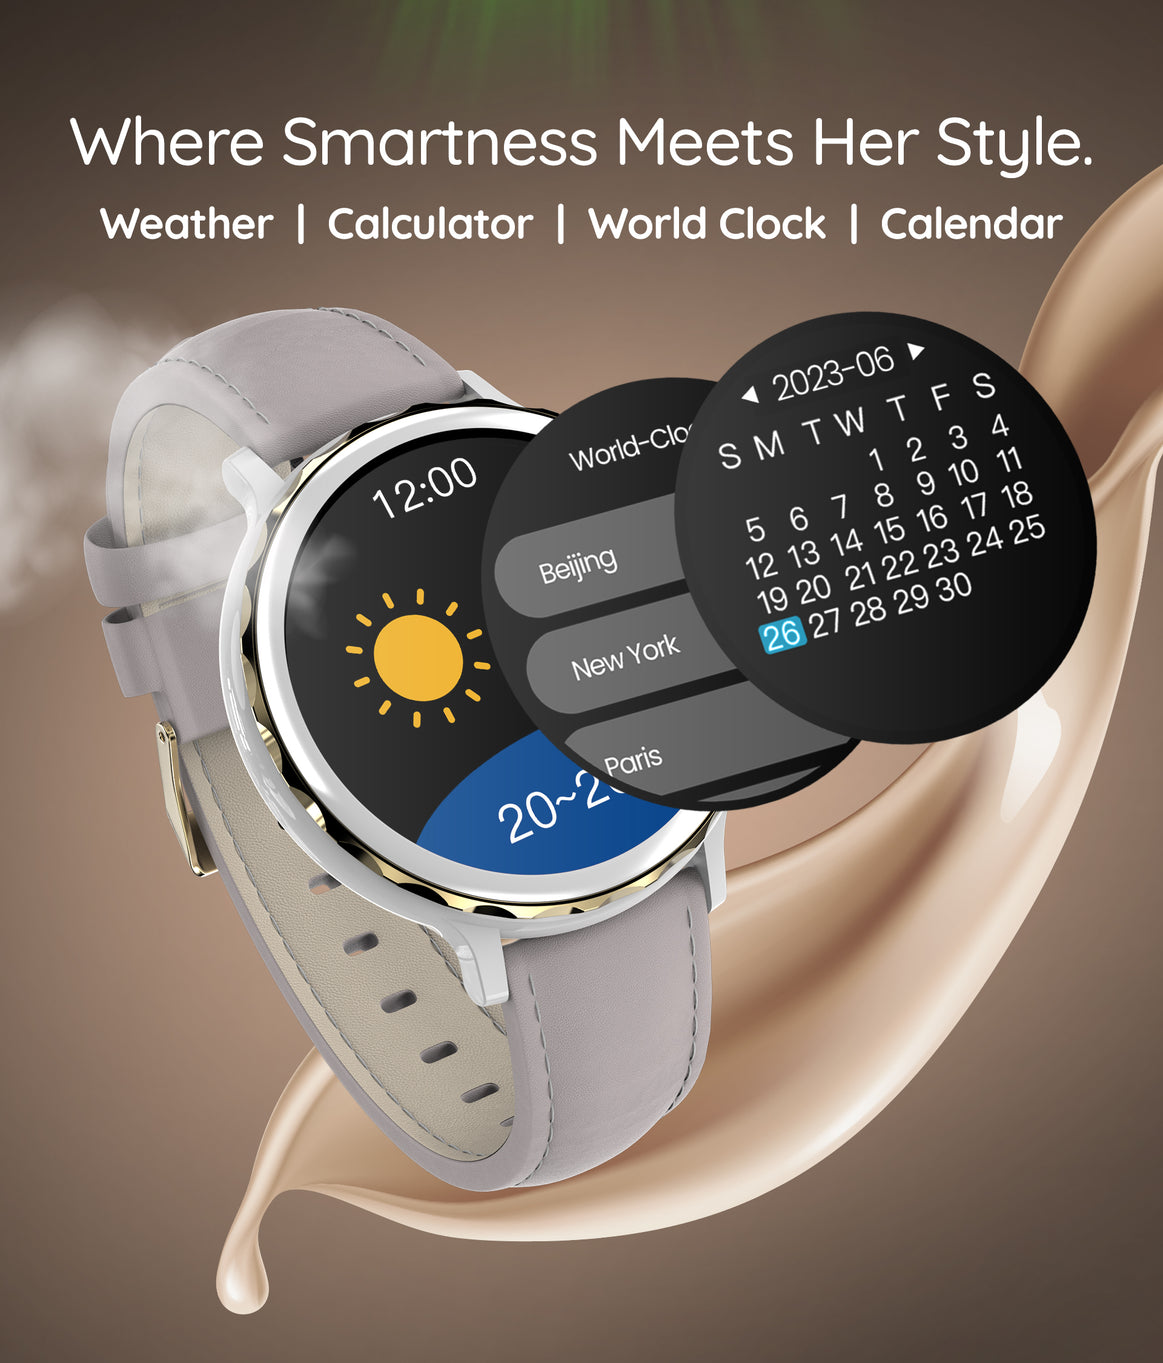 Pebble Diva Smartwatch